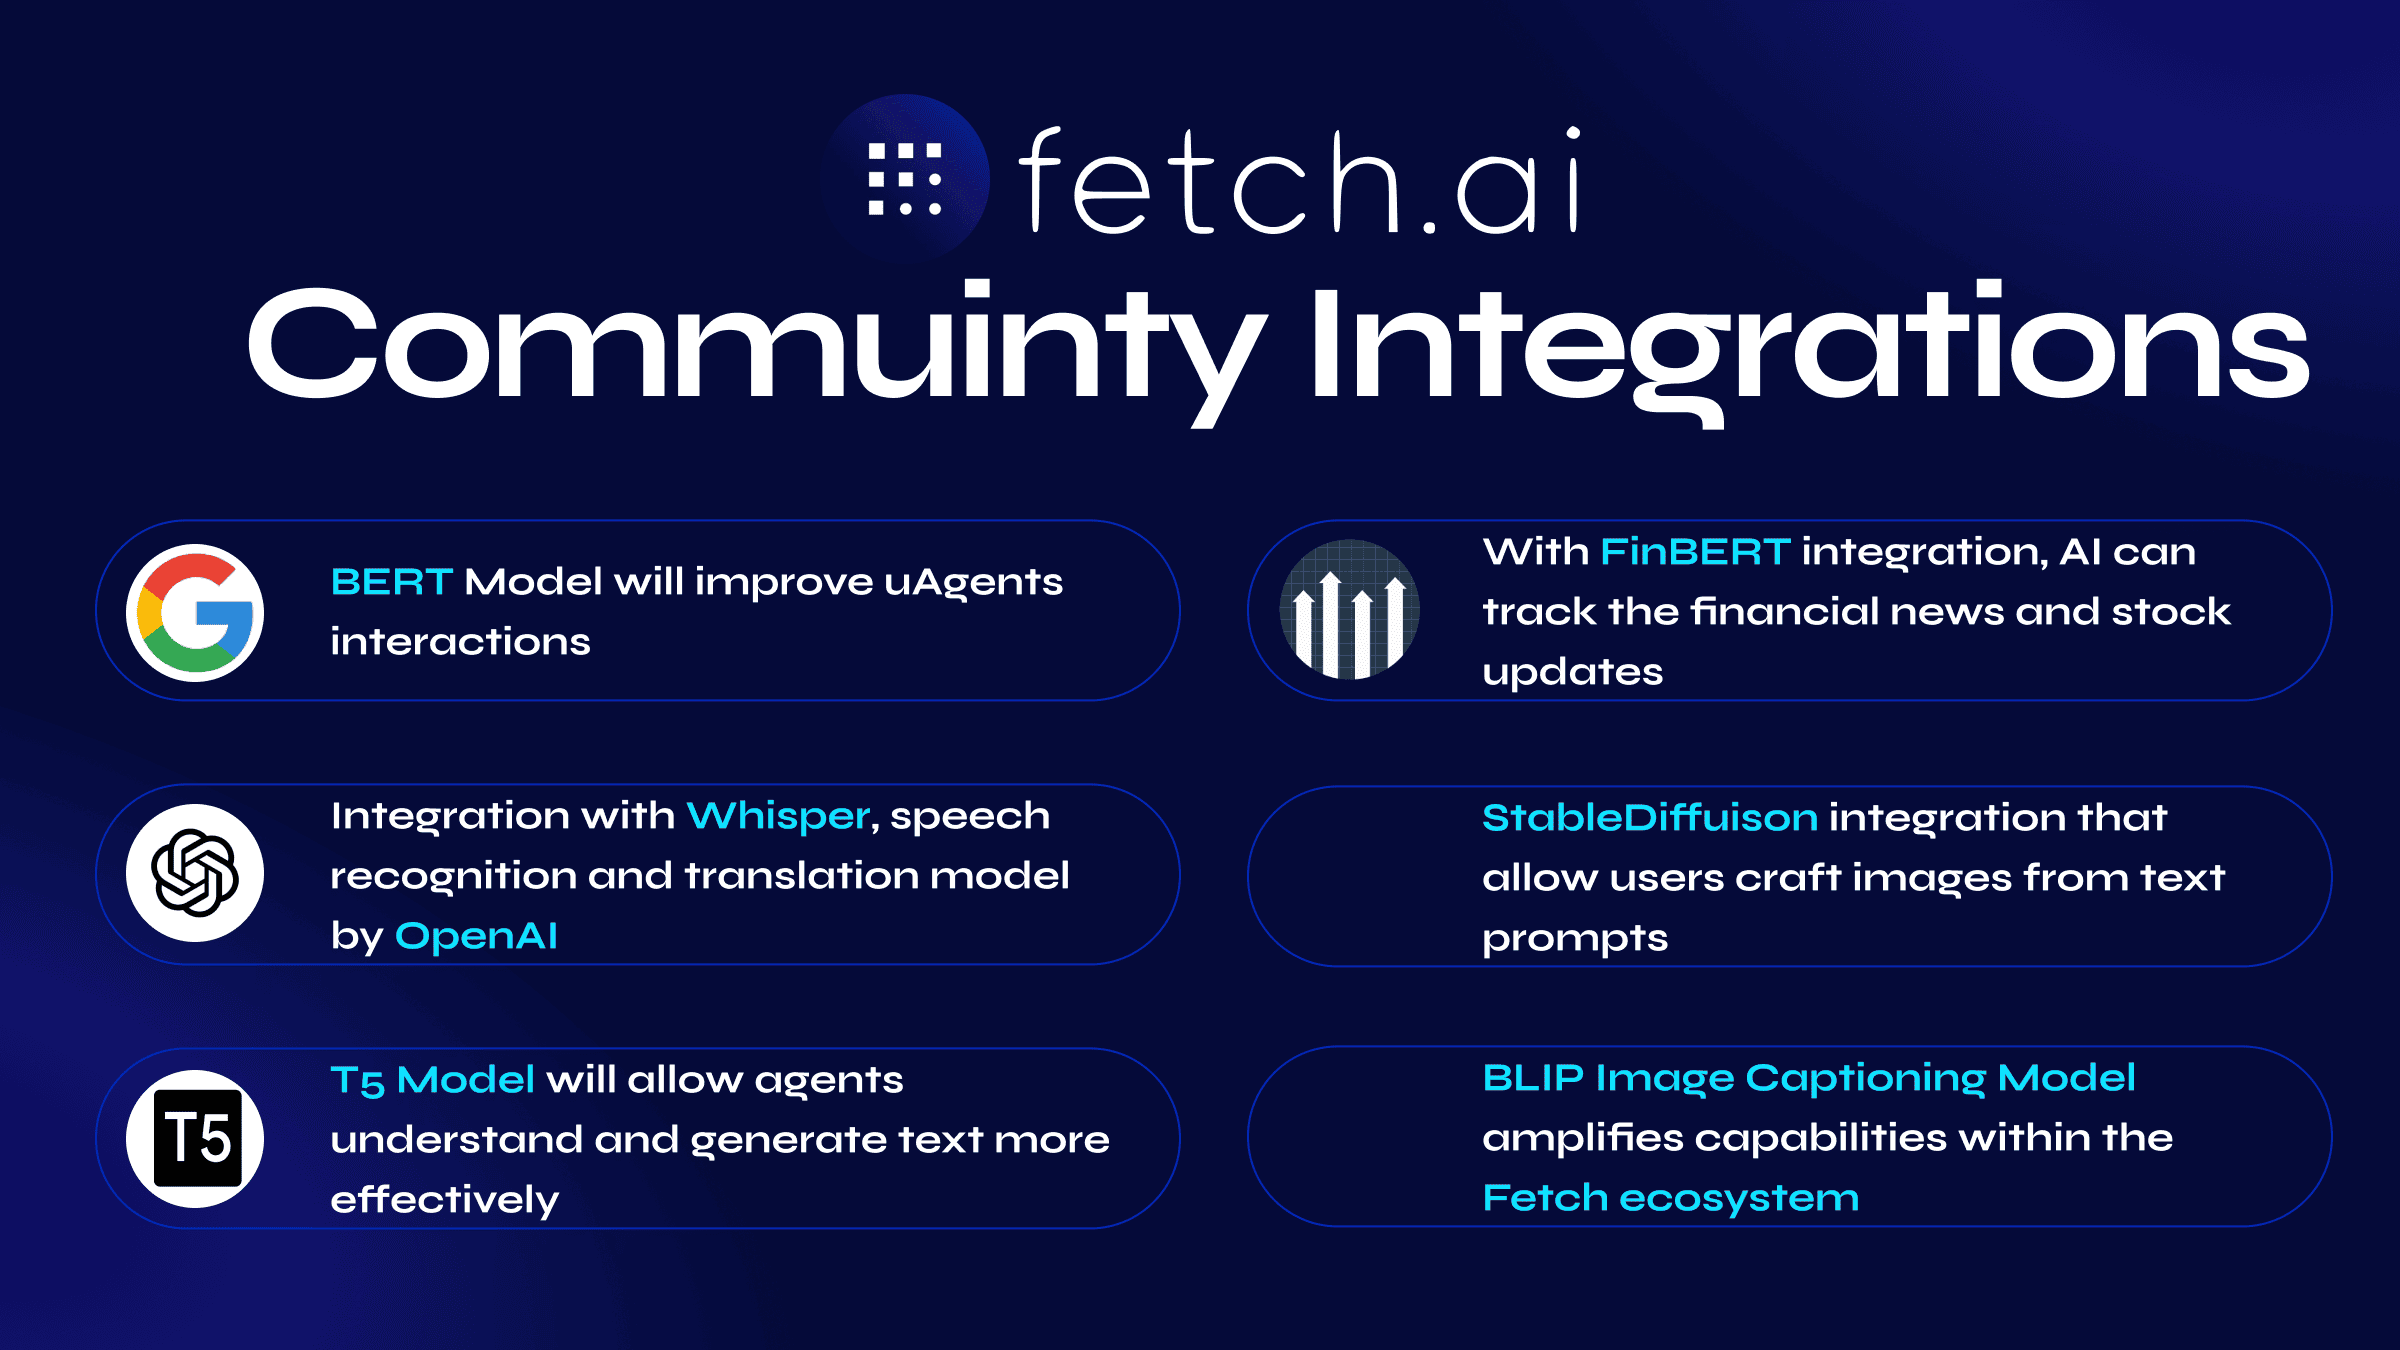 Fetch.ai Community Integrations